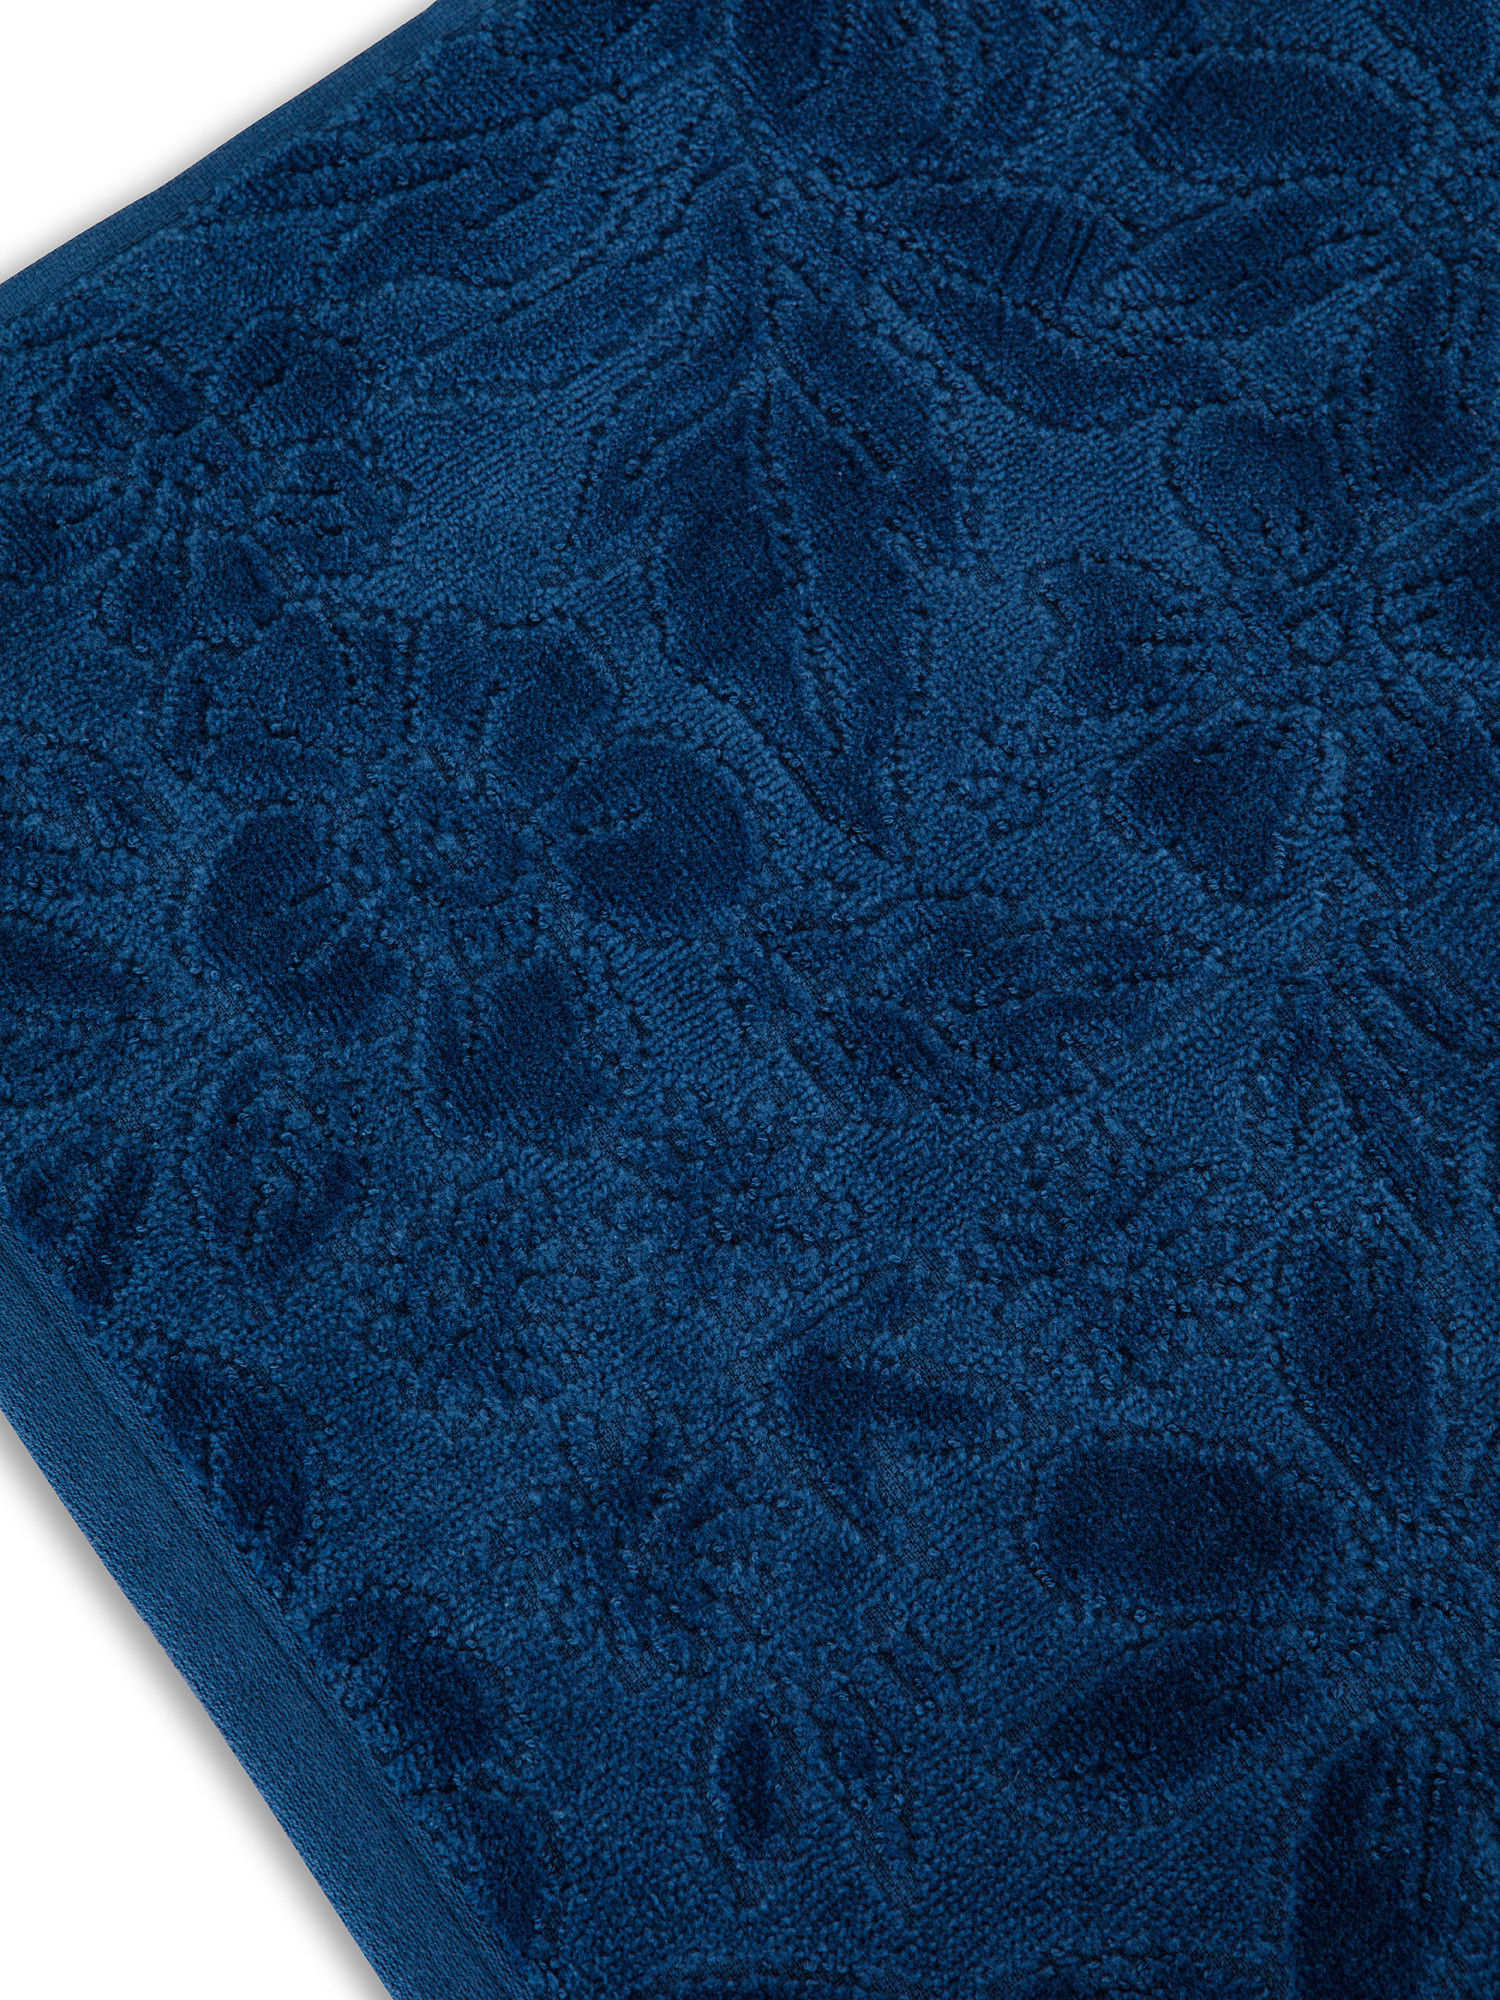 Asciugamano puro cotone lavorazione a fiori, Blu, large image number 2